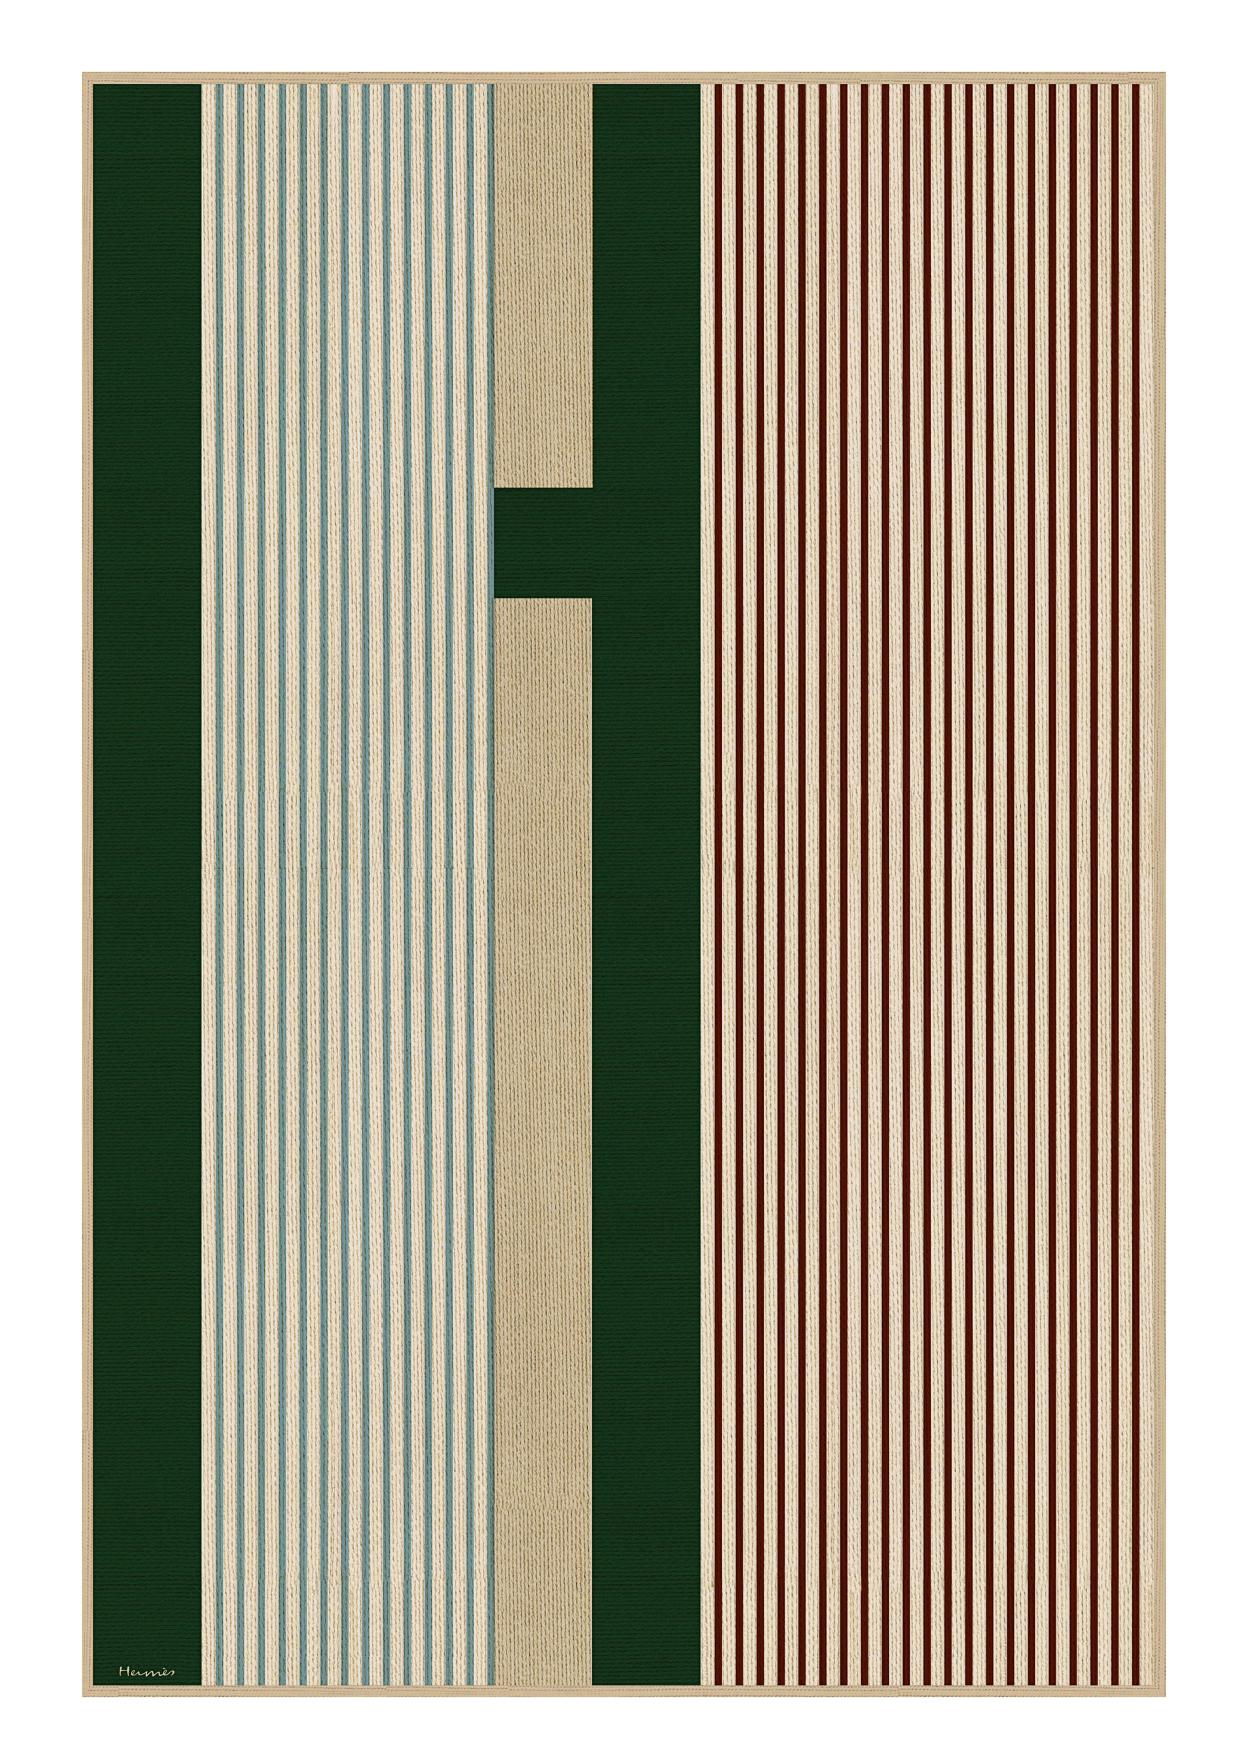 H Vibration Cordélie rug; price upon request. hermes.com